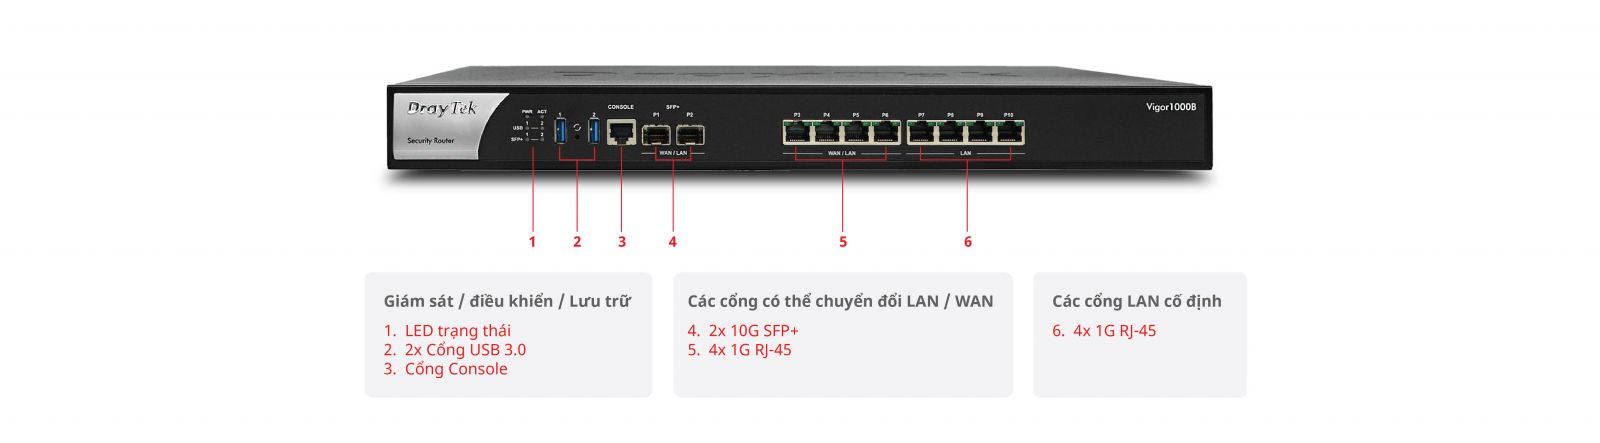 DrayTek Vigor1000B - 10G High-Performance Enterprise Load Balancing Security Router